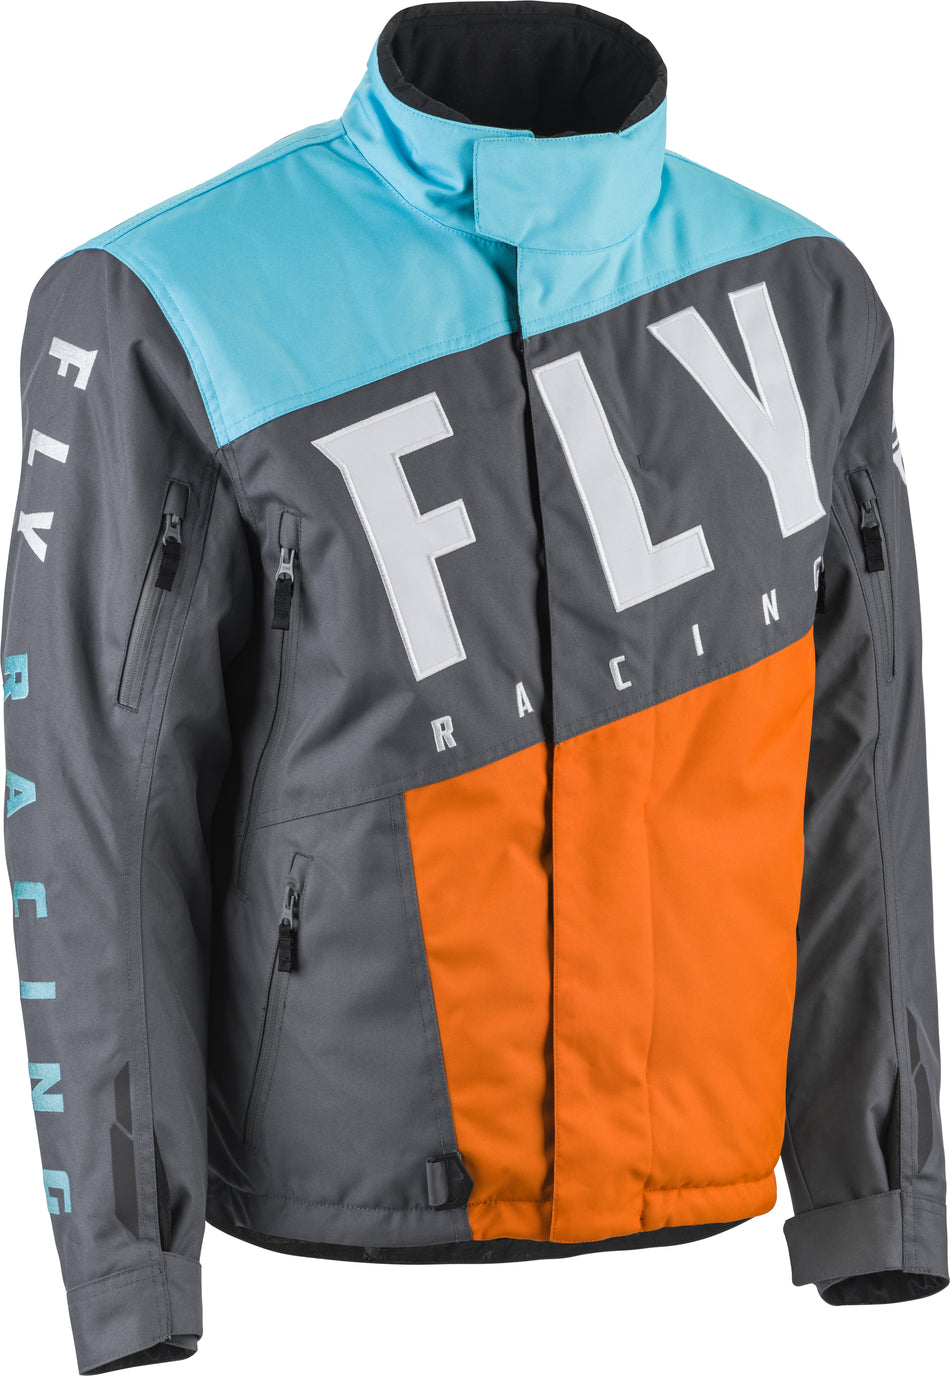 FLY RACING Snx Pro Jacket Orange/Light Blue/Black Md 470-4114M